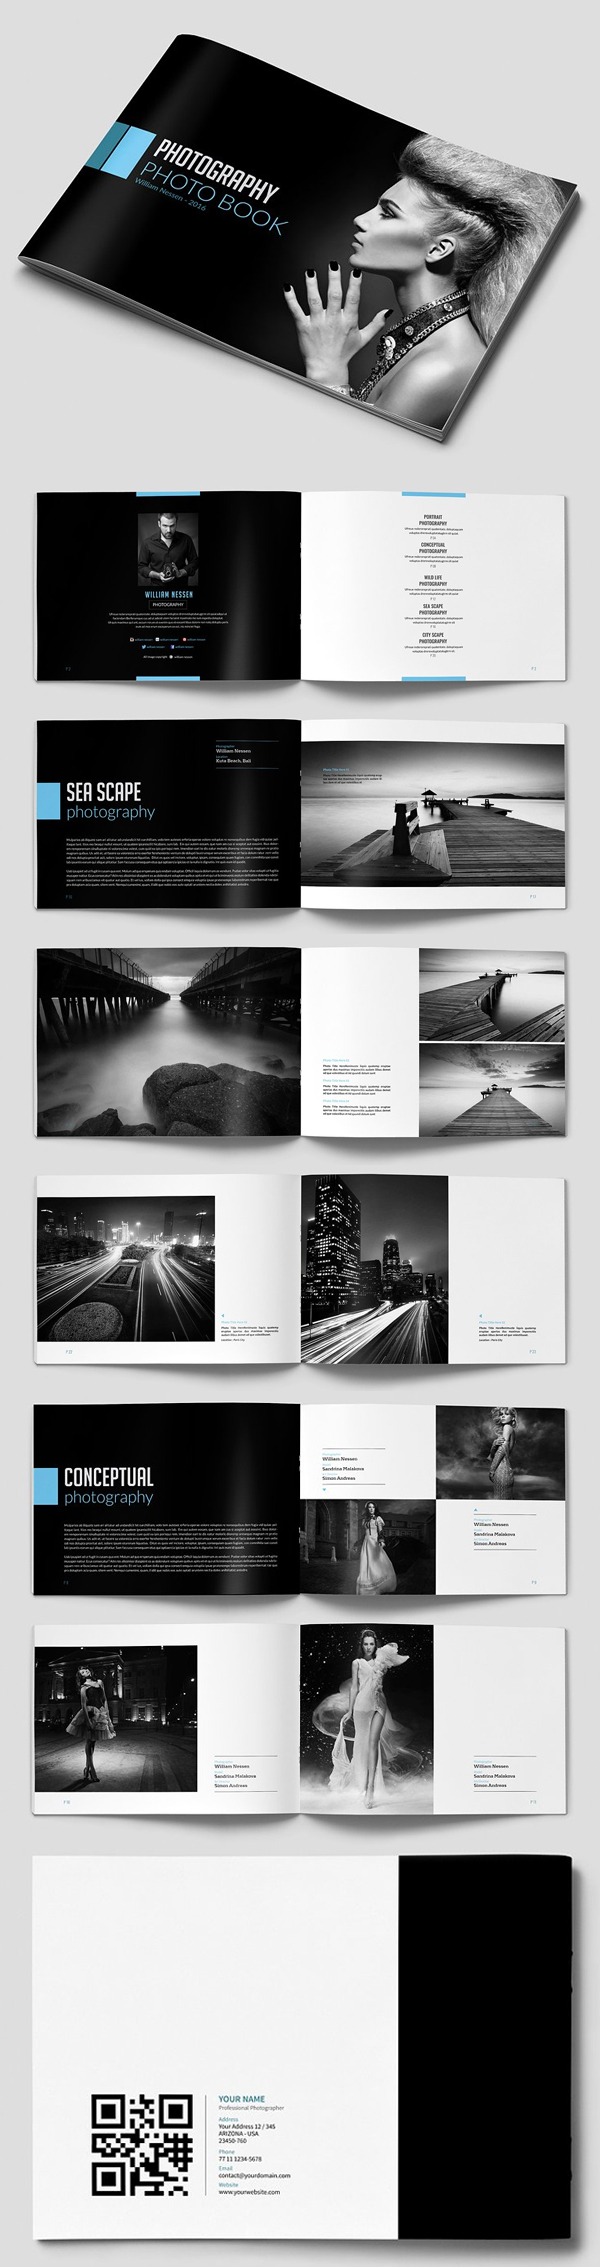 100 Professional Corporate Brochure Templates - 43